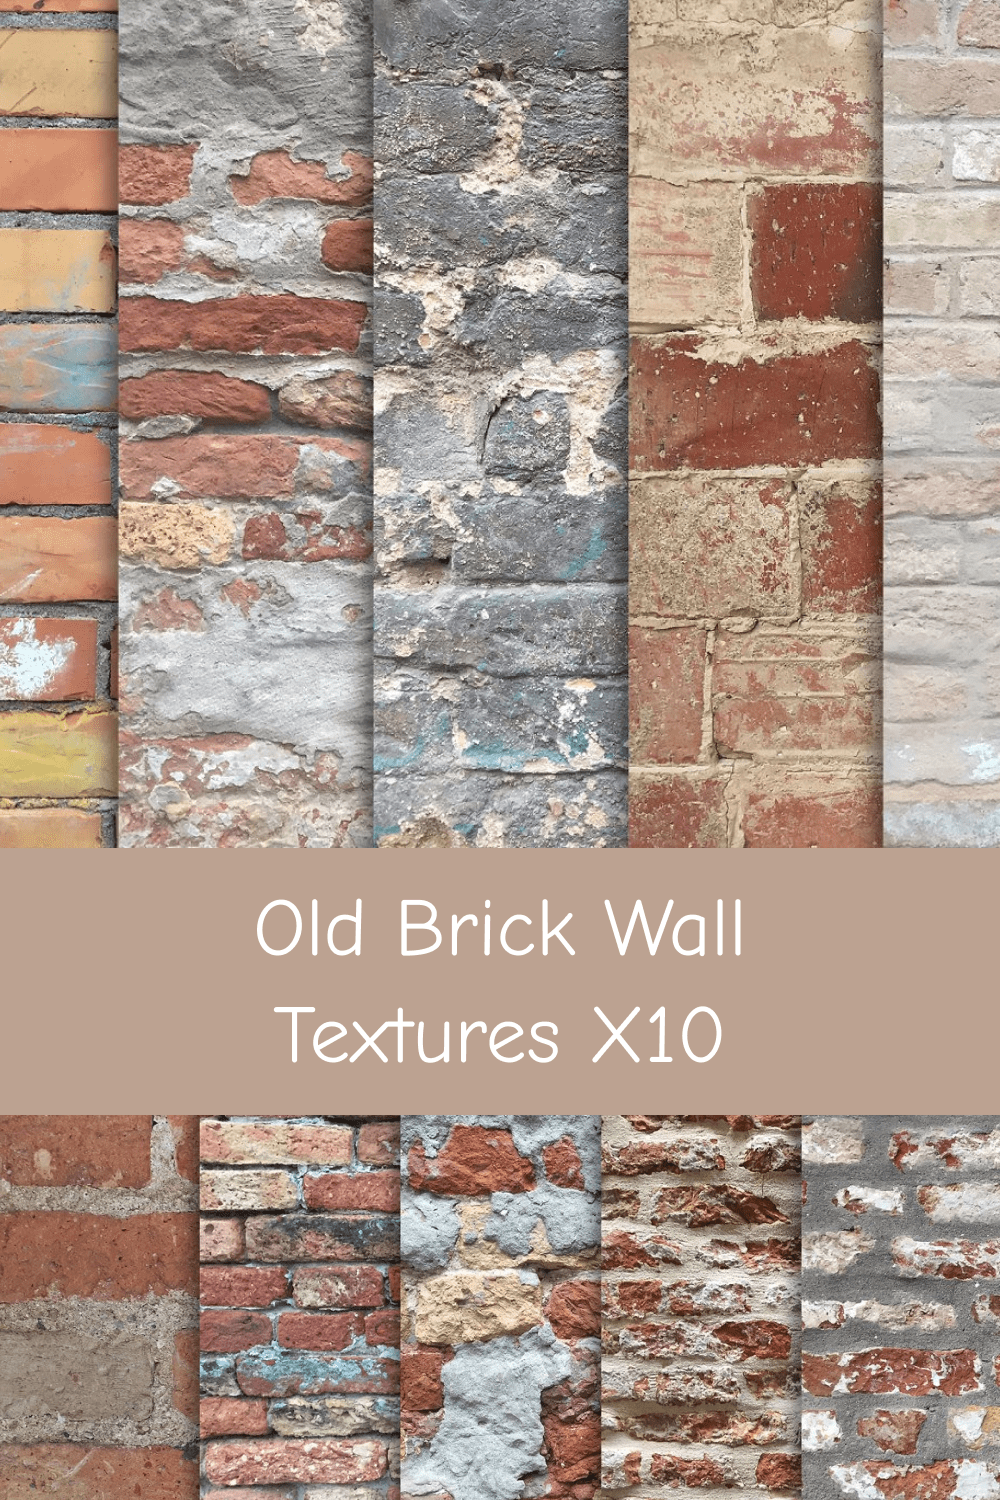 Old Brick Wall Textures x10.